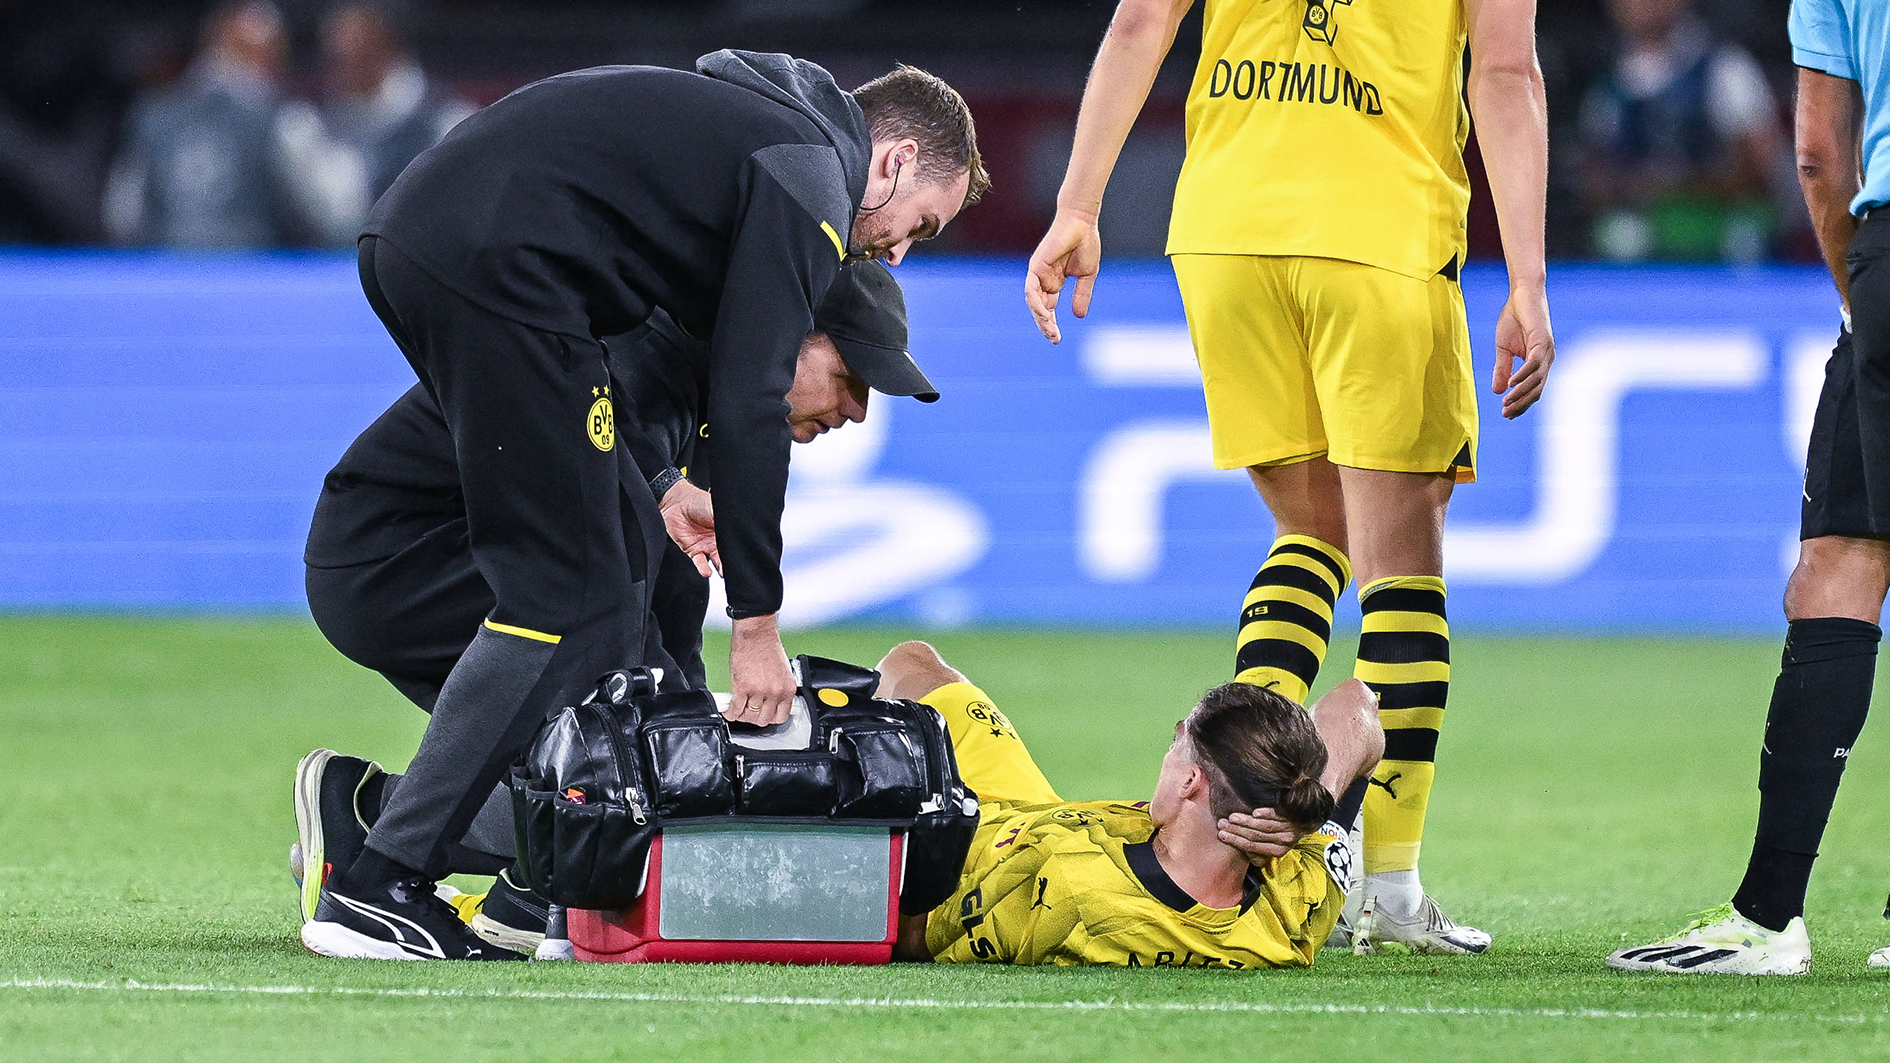 <strong>Marcel Sabitzer (Borussia Dortmund)</strong><br>Muss nach nicht mal 15 Minuten verletzt vom Platz. <strong><em>ran</em>-Note: Ohne Bewertung</strong>